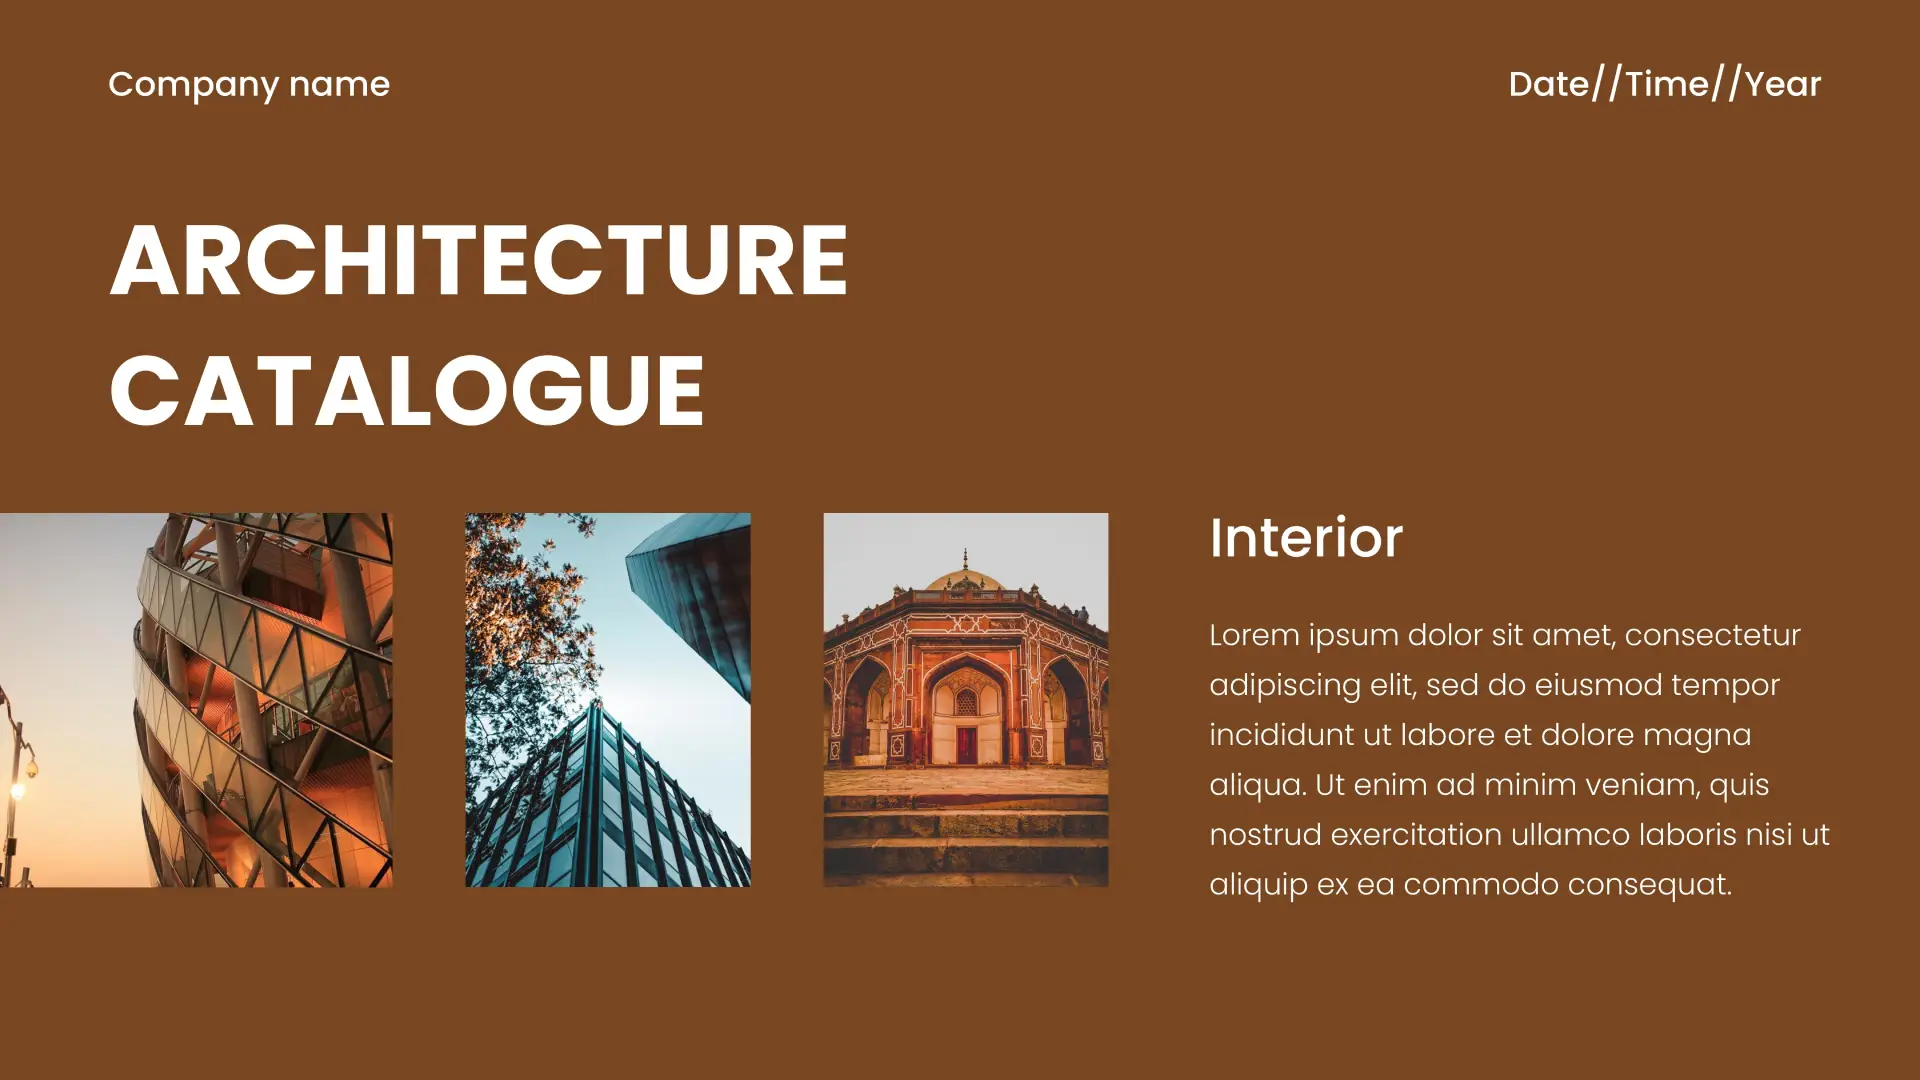 Architecture portfolio Page 5 Template for Google Slides